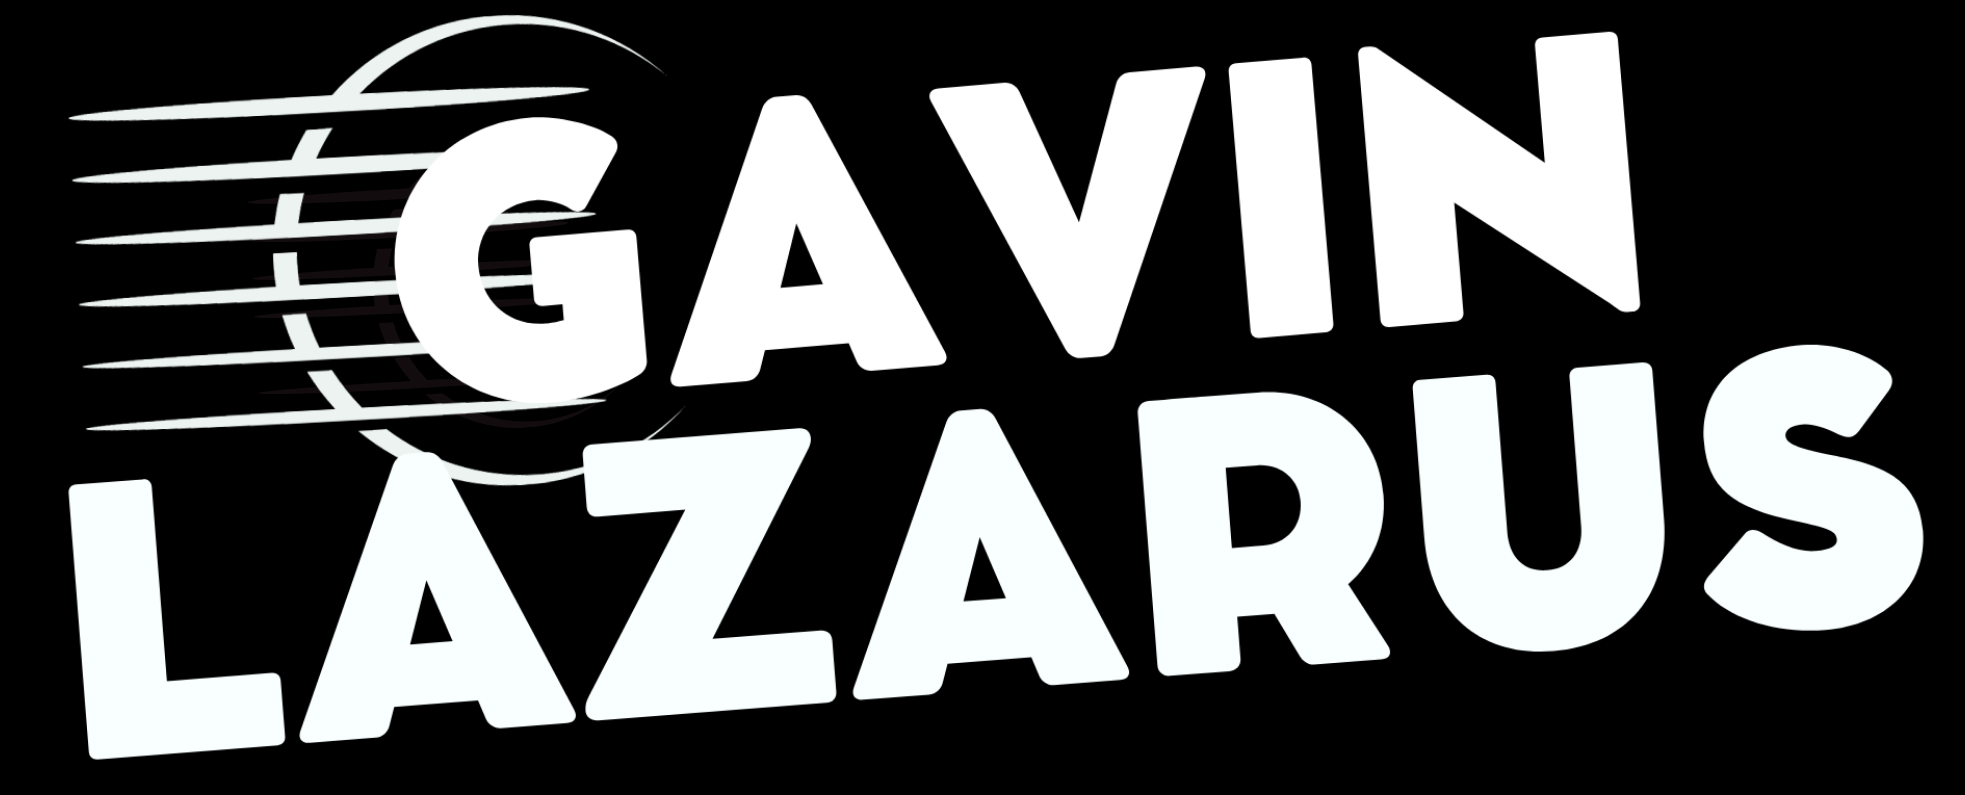 Gavin Lazarus logo